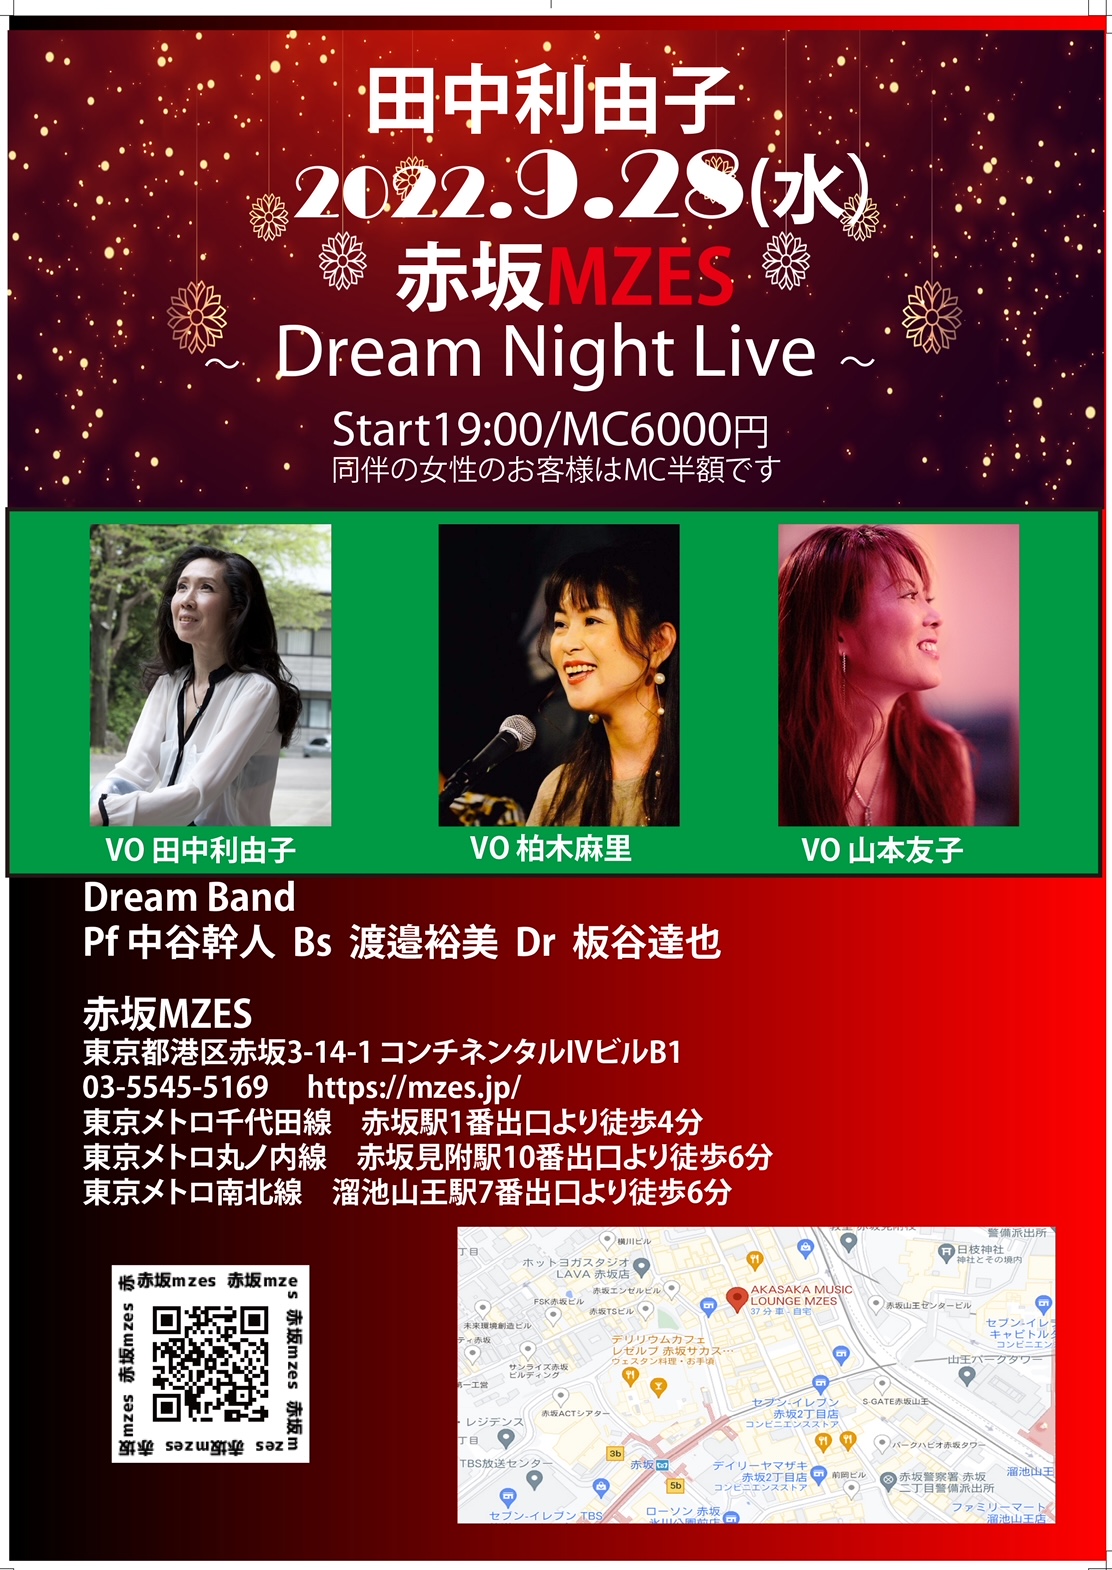 Dream Night Live